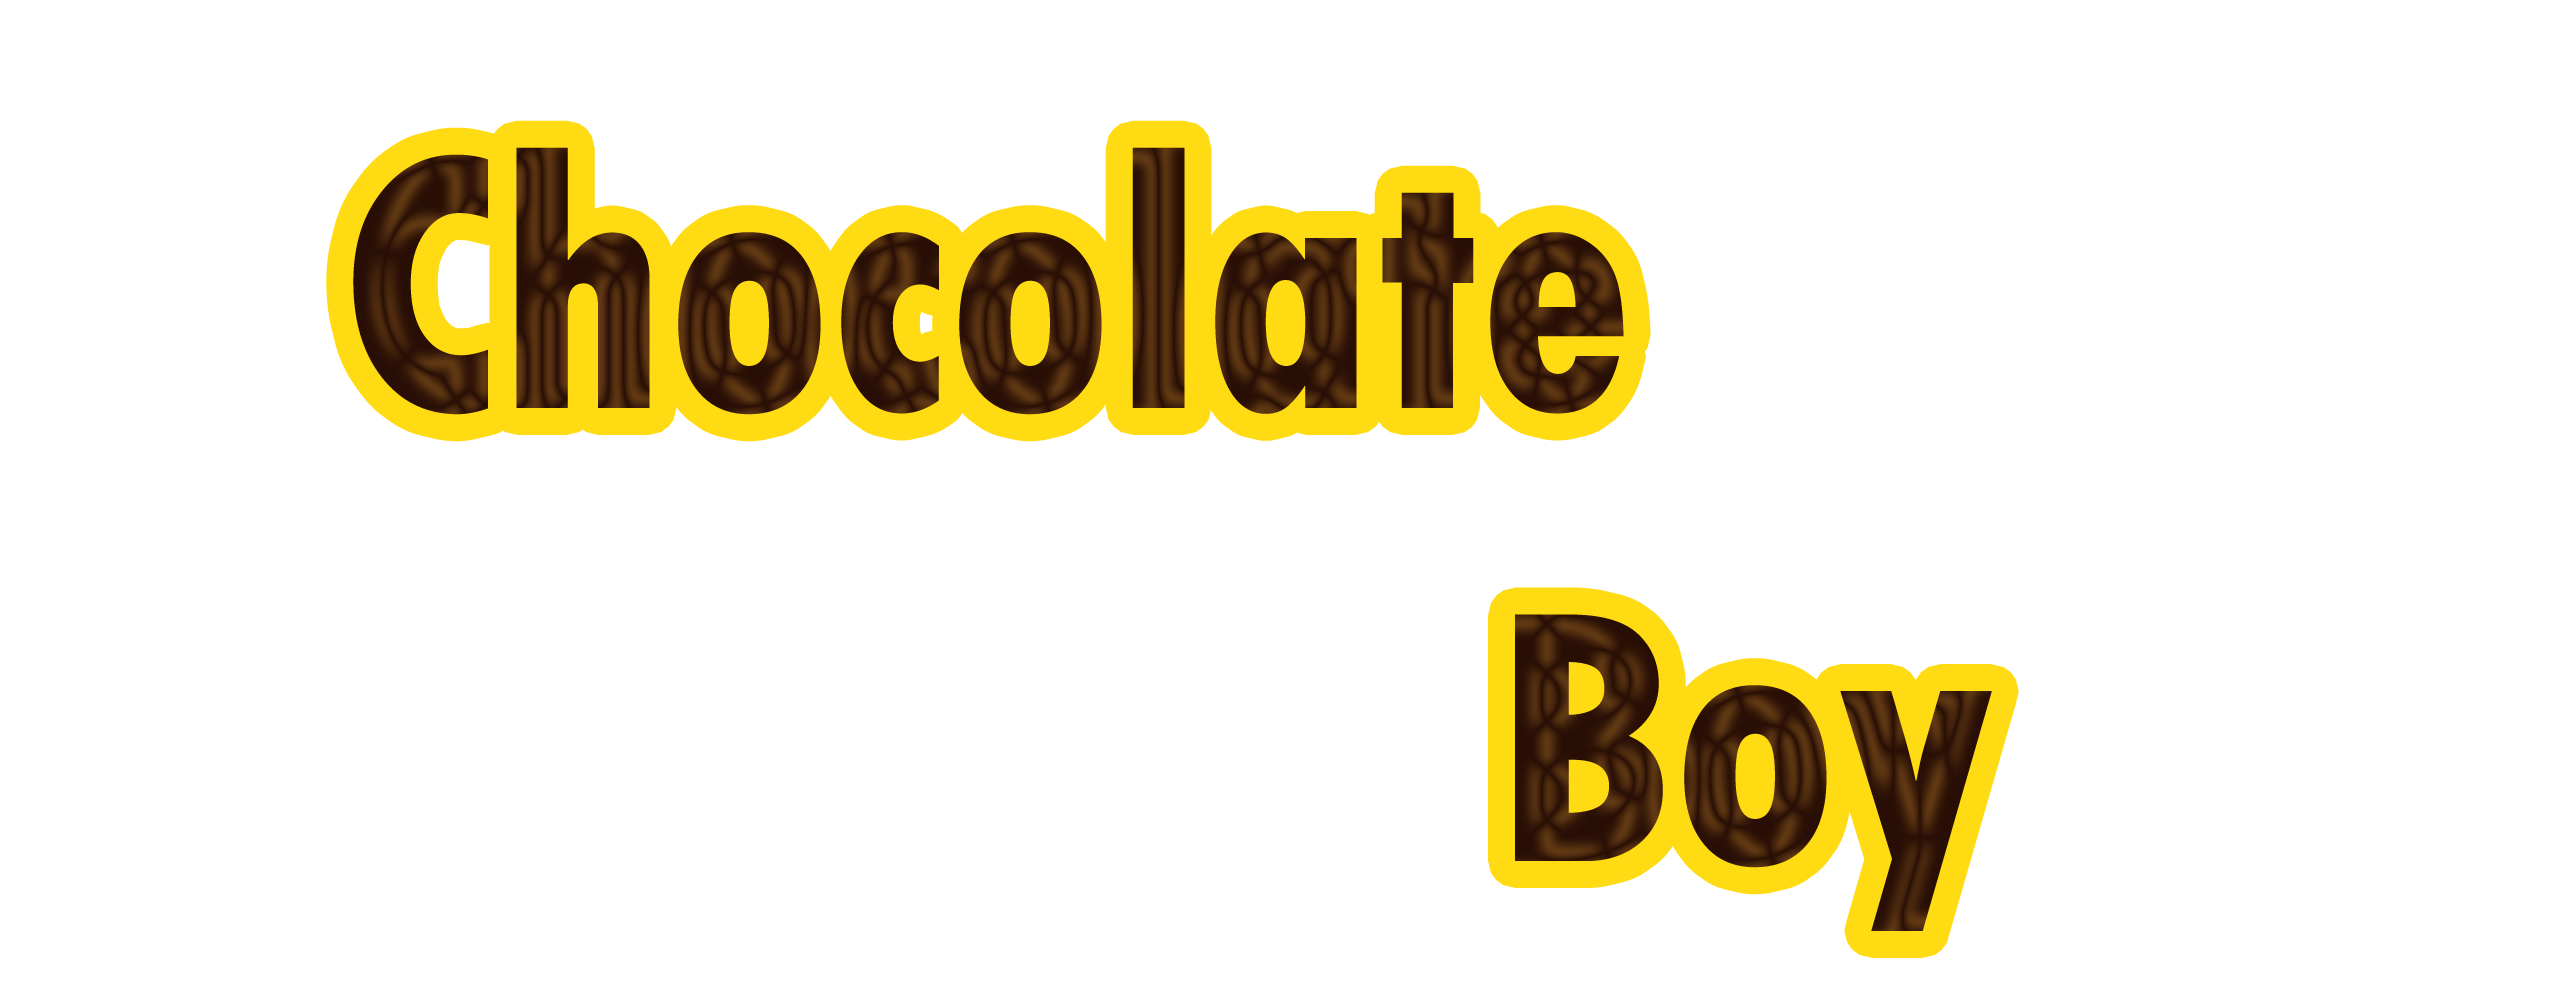 Chocolate Boy #7